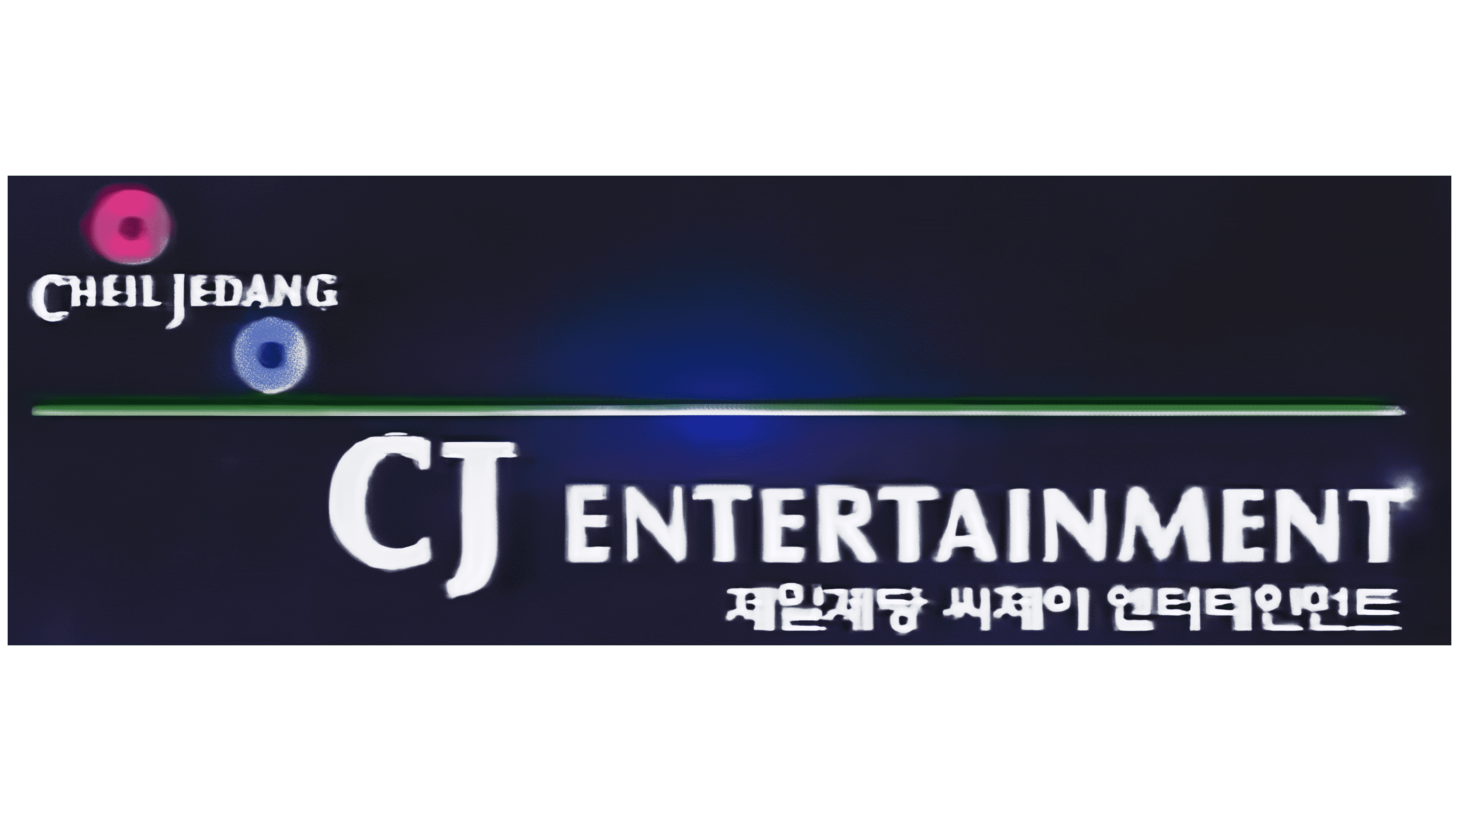 Cj entertainment sign 1996